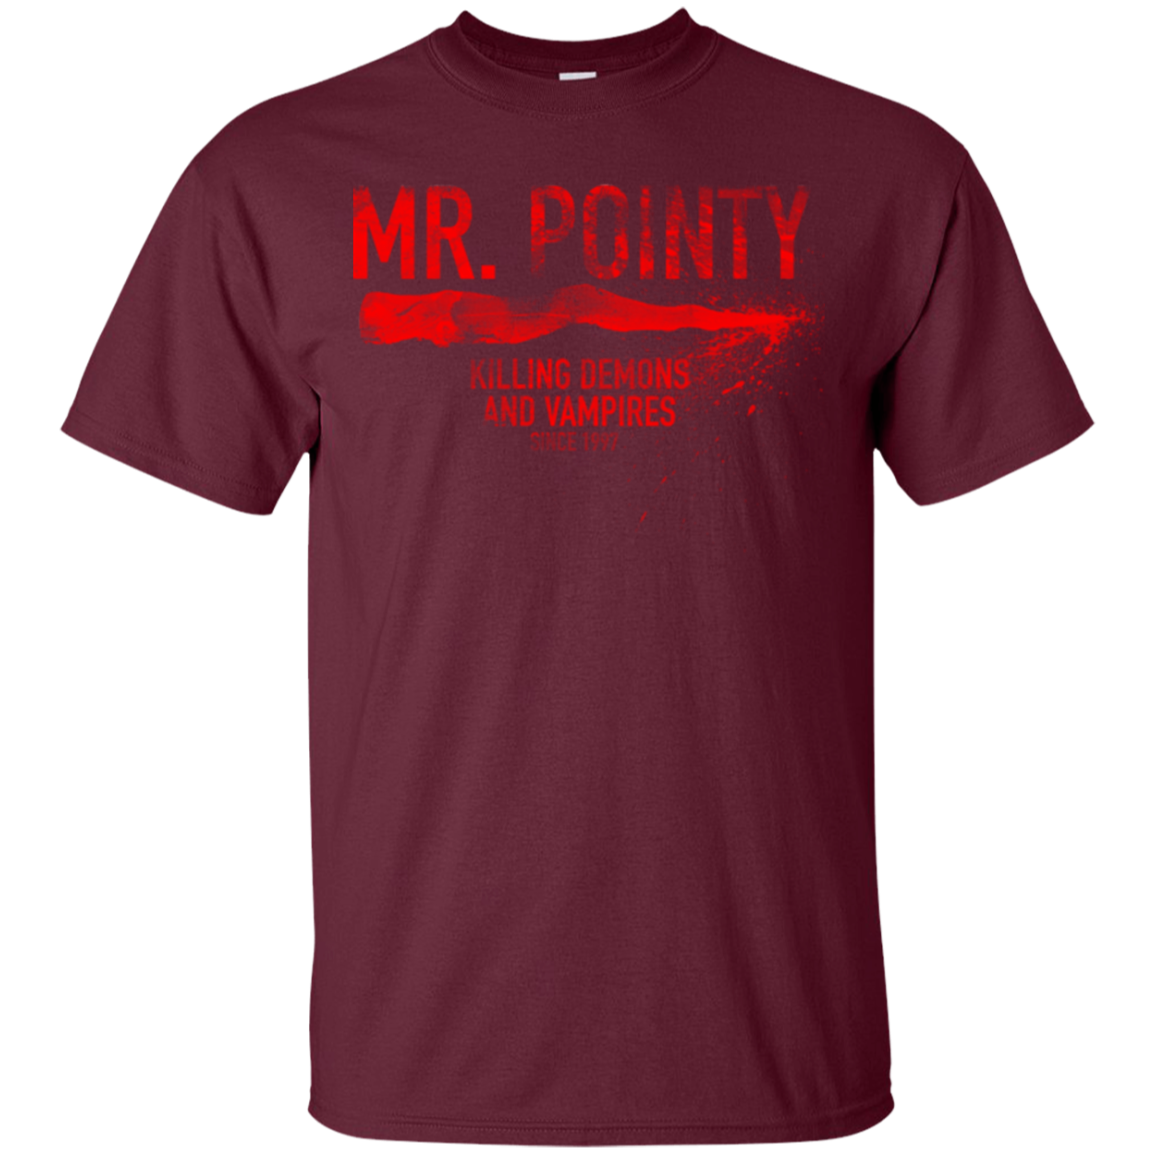 Mr Pointy T-Shirt